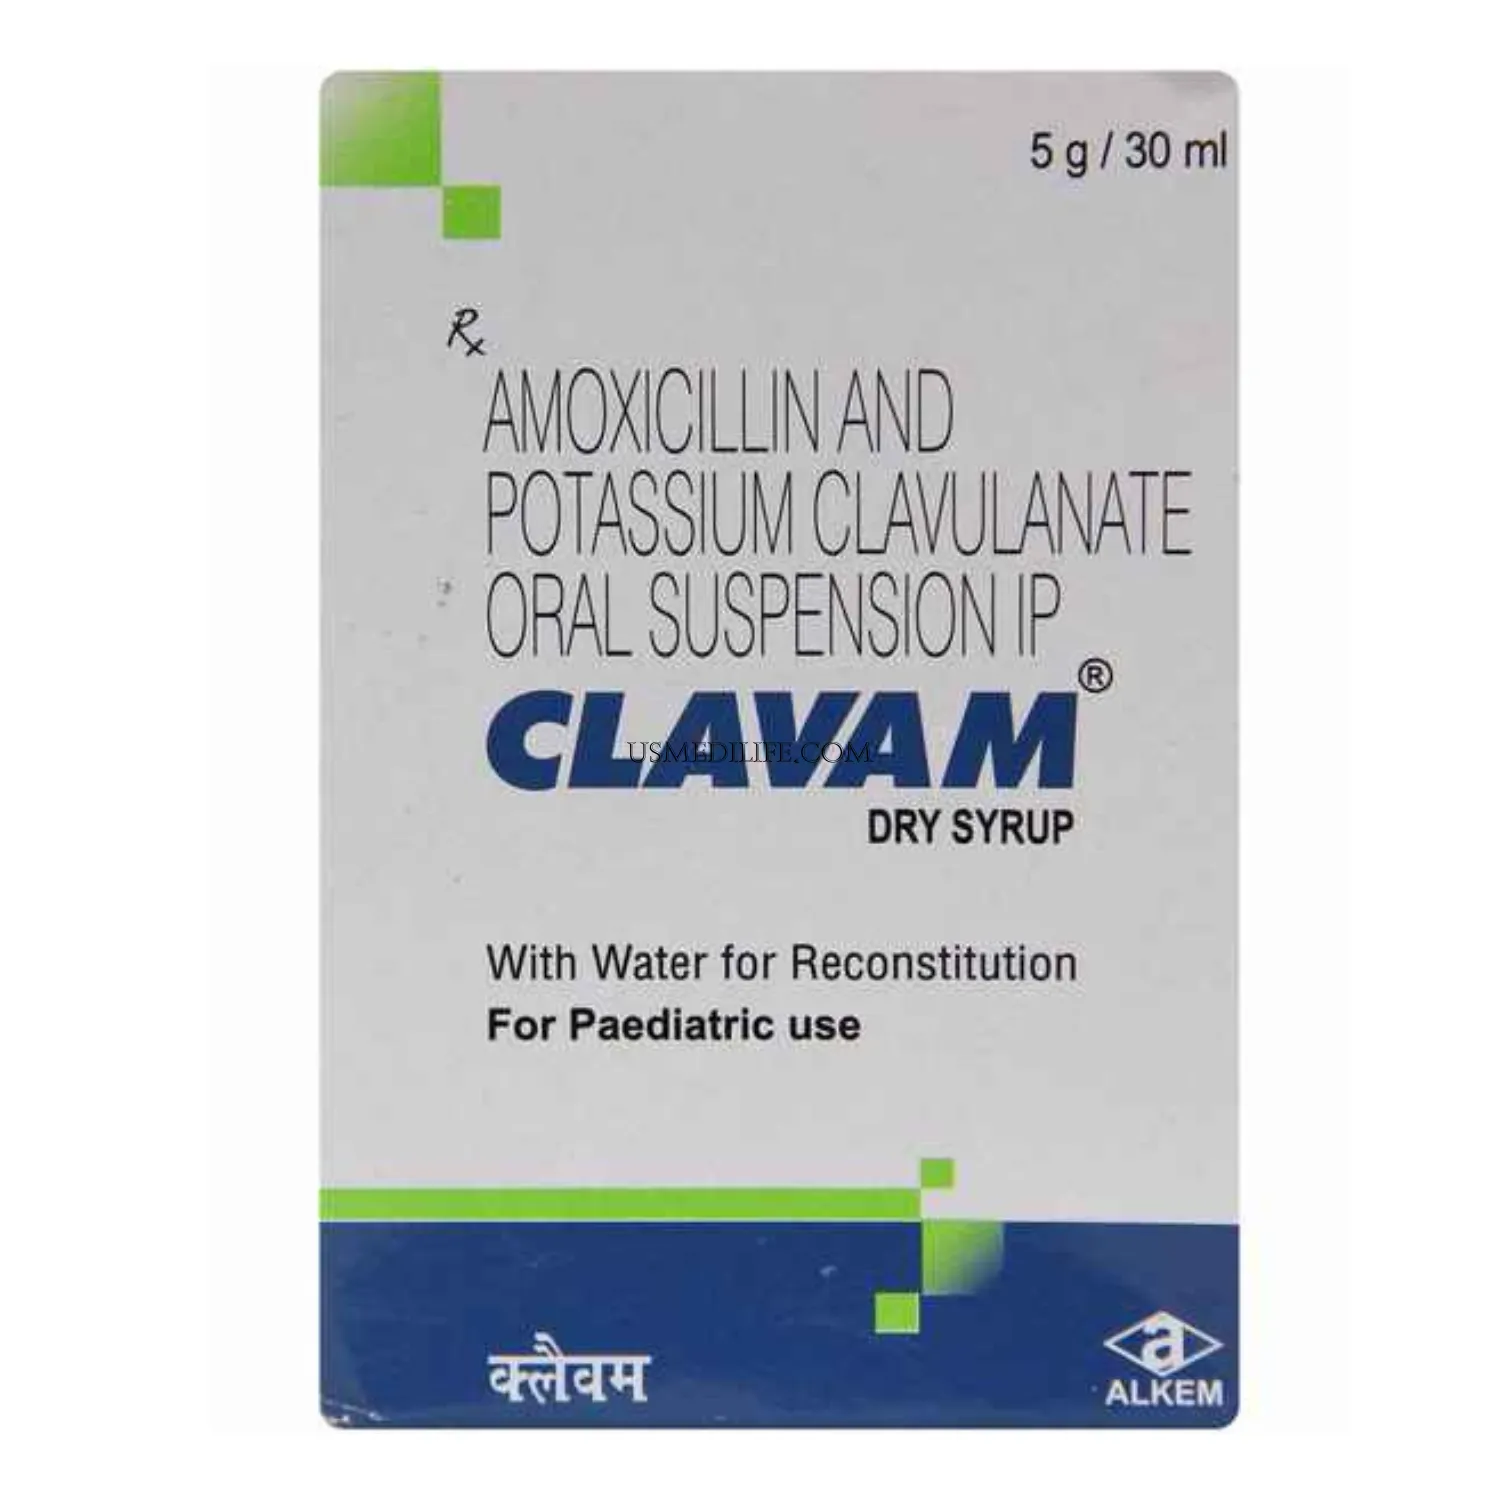 Clavam Dry Syrup 30 ml Bottle Image